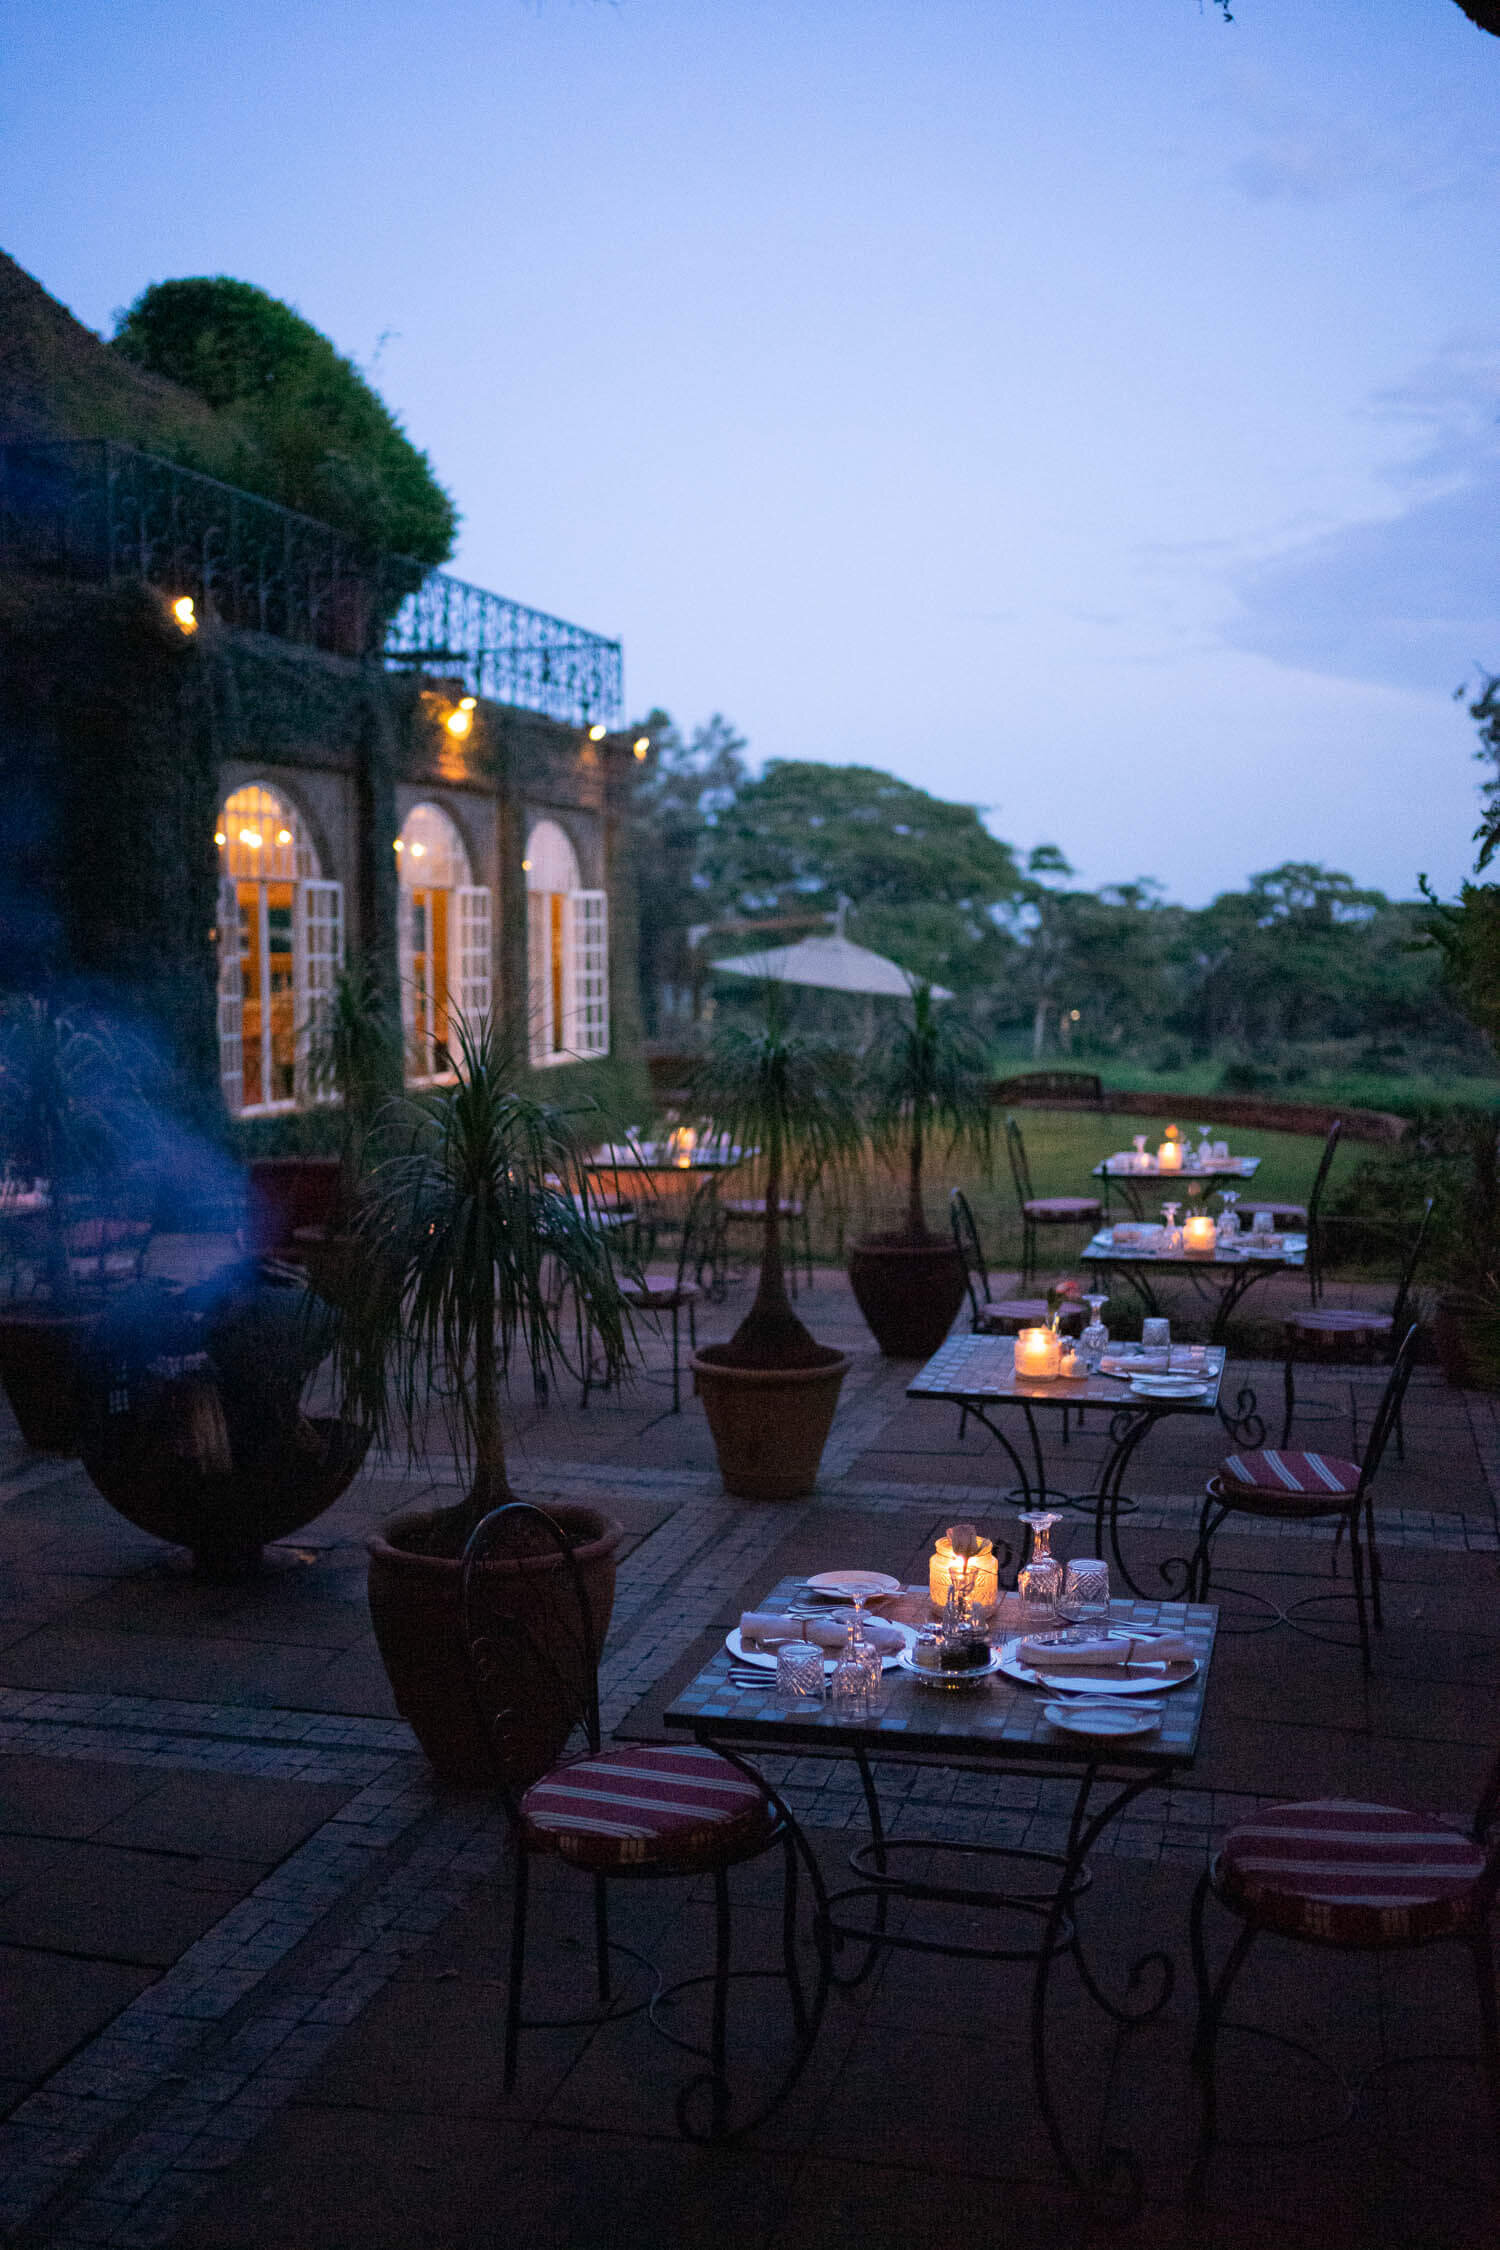 Giraffe-manor-evening-dinner-patio-table-settings-by-firepit.jpeg